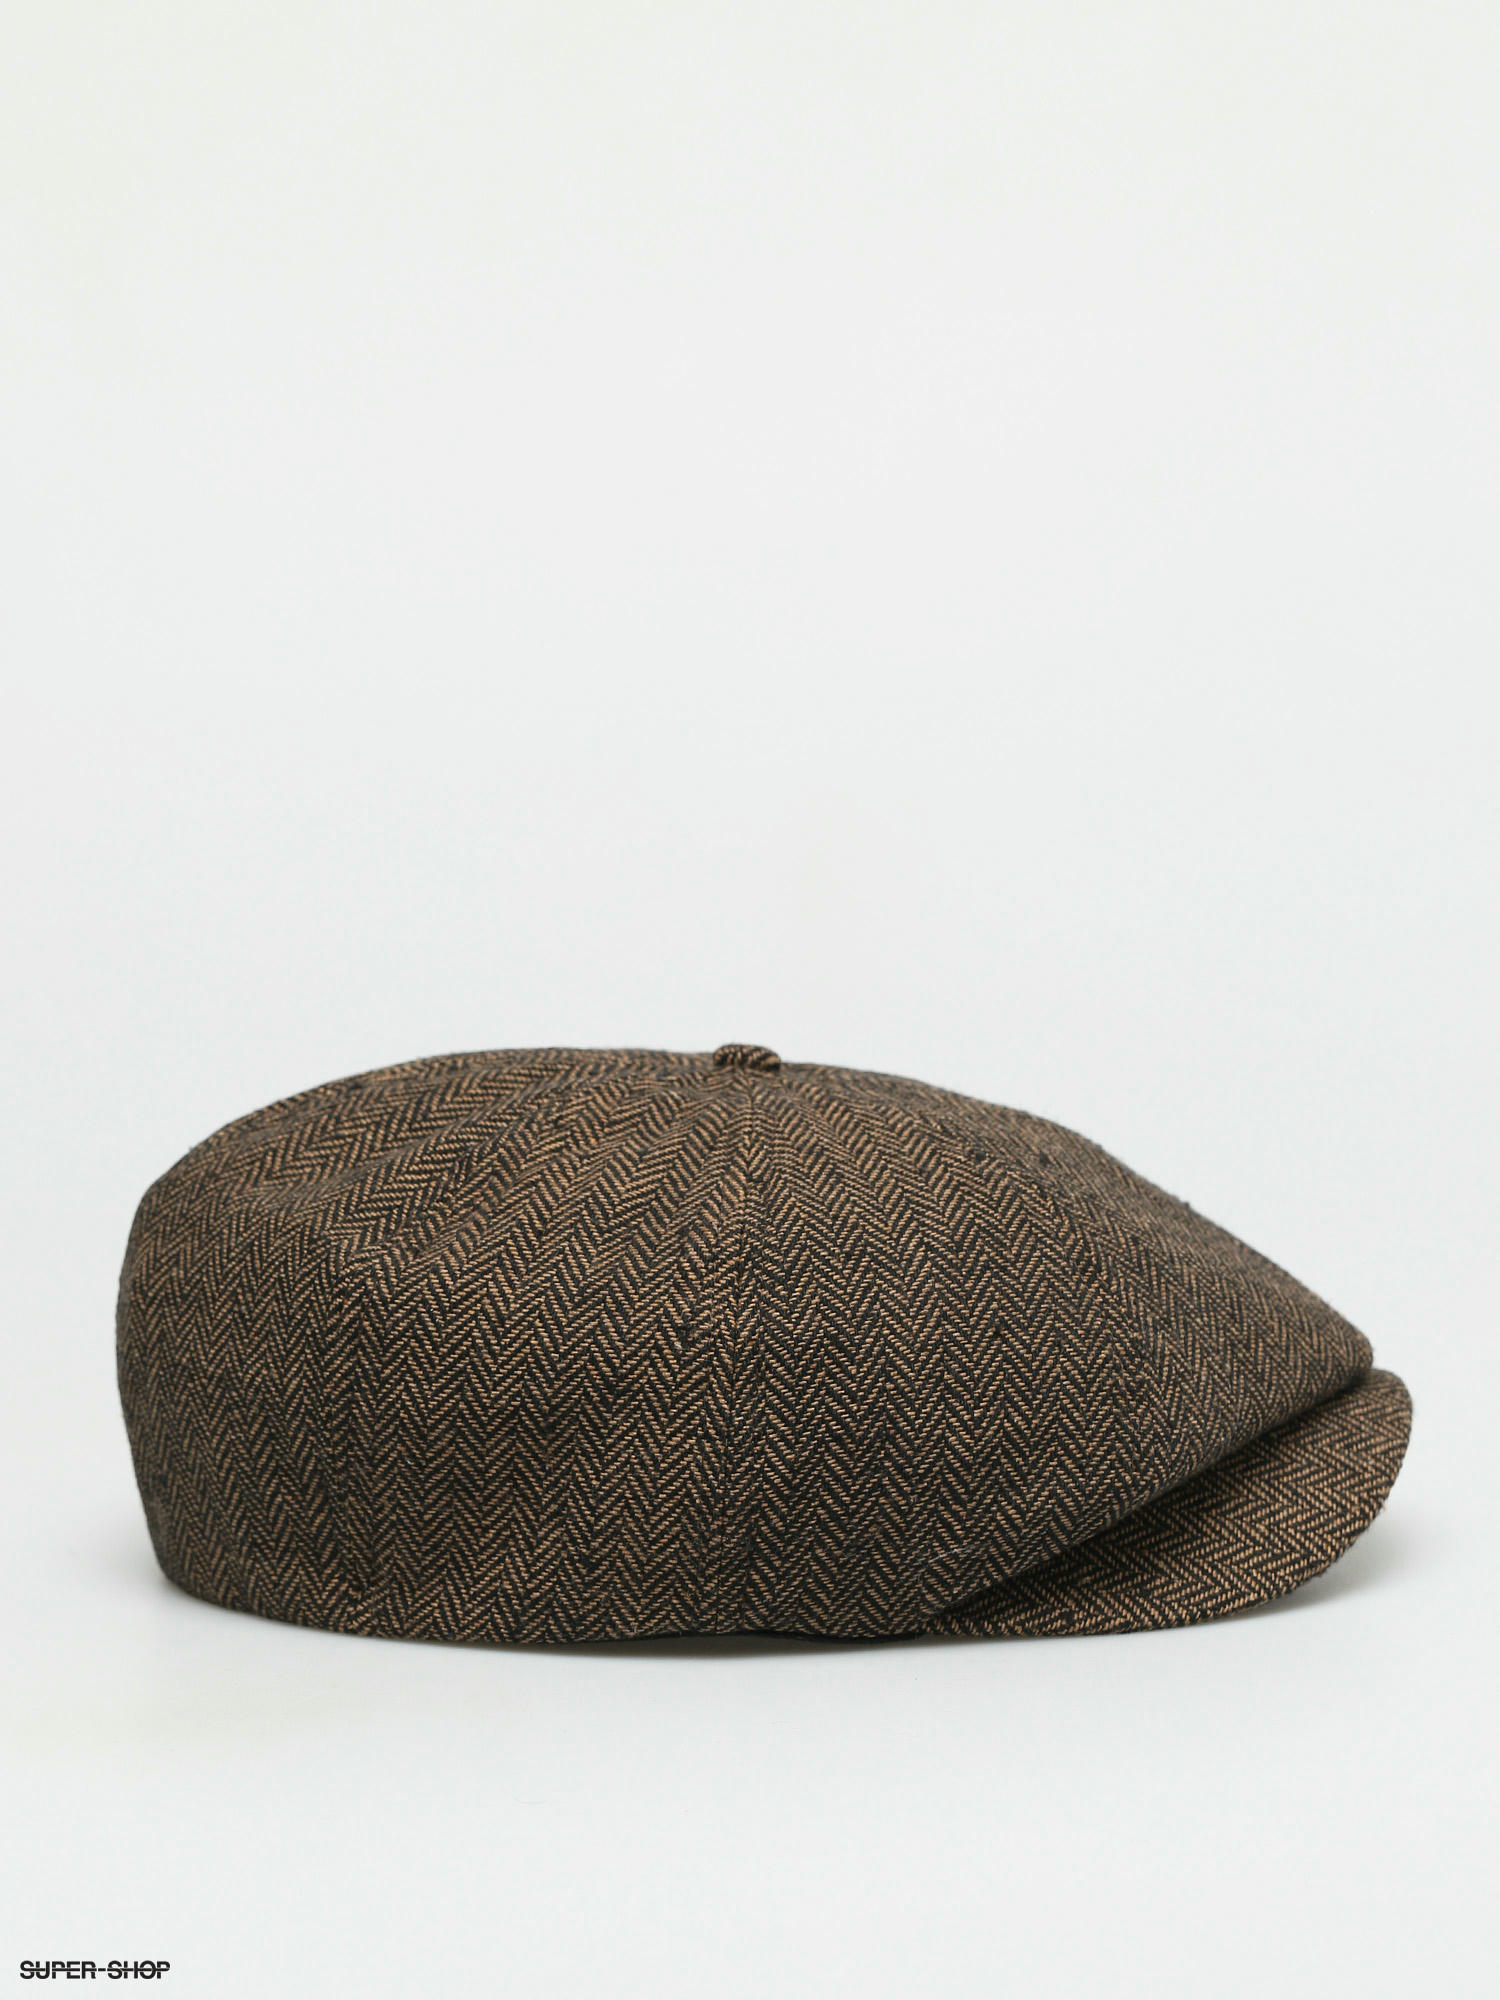 Brixton Brood Snap Cap Flat cap (brown/khaki)